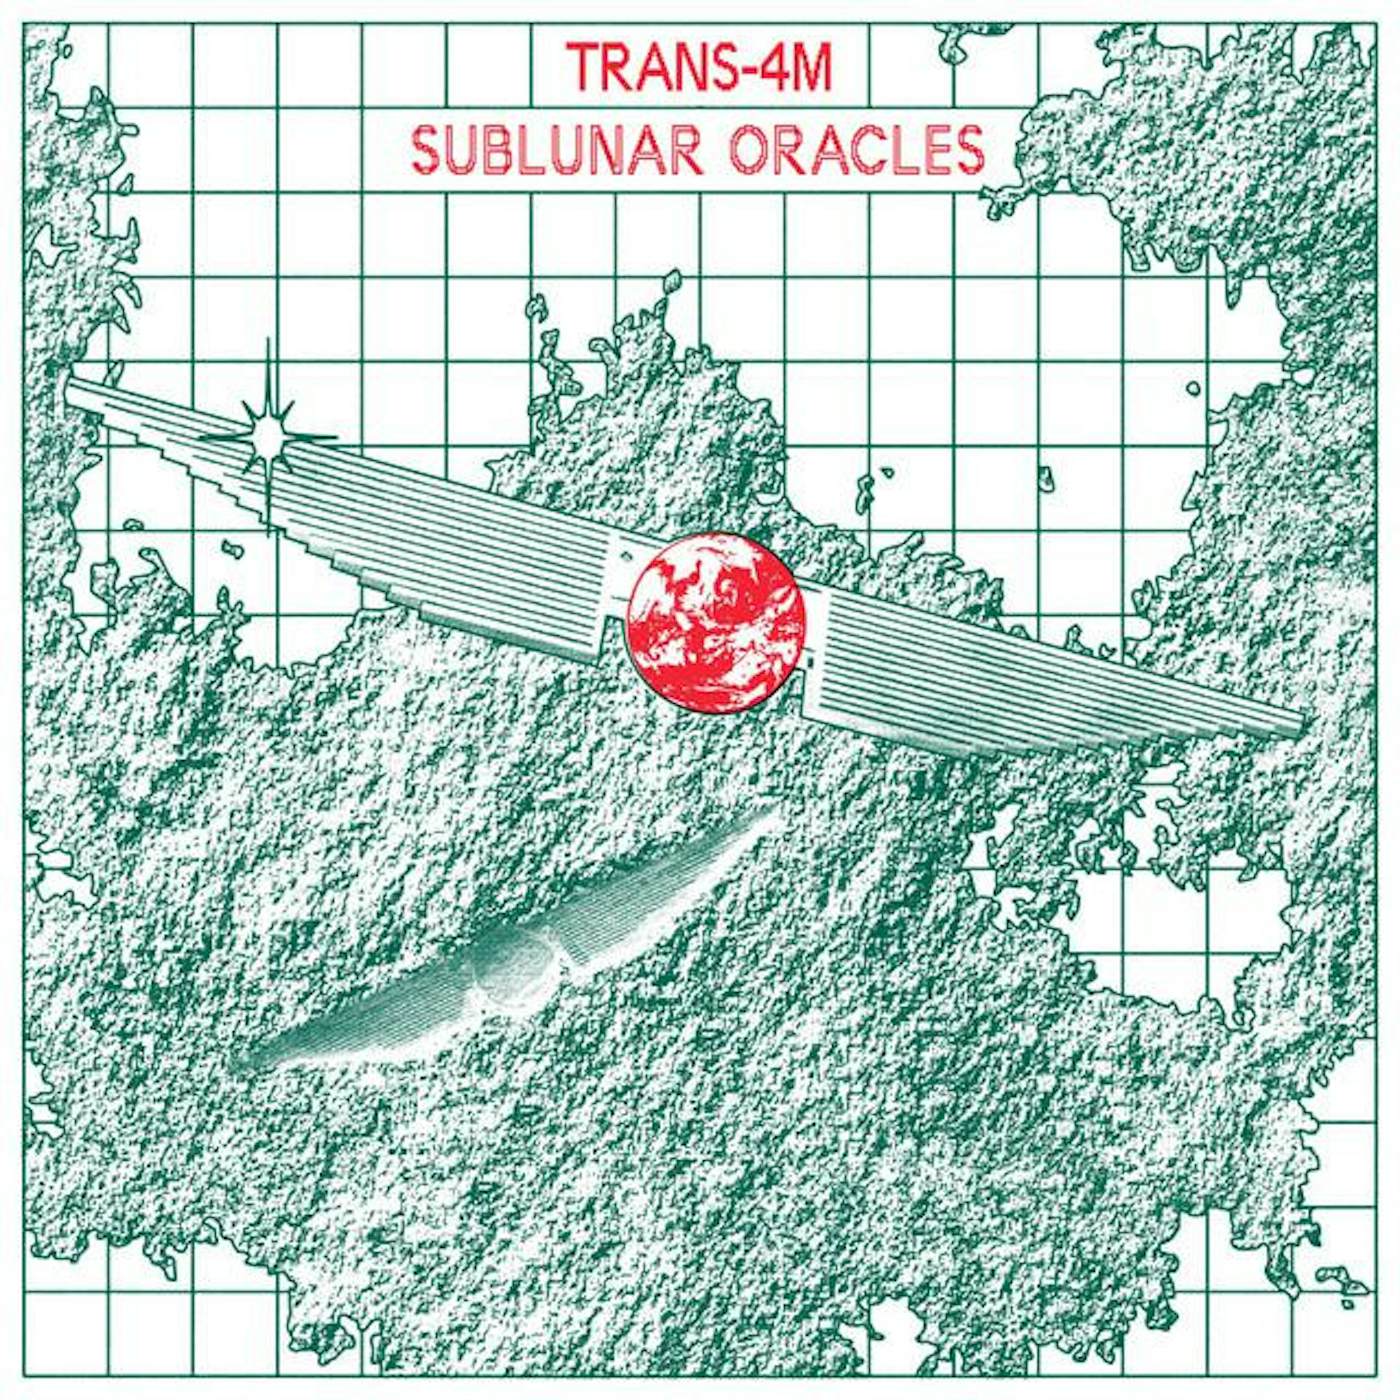 Trans-4M